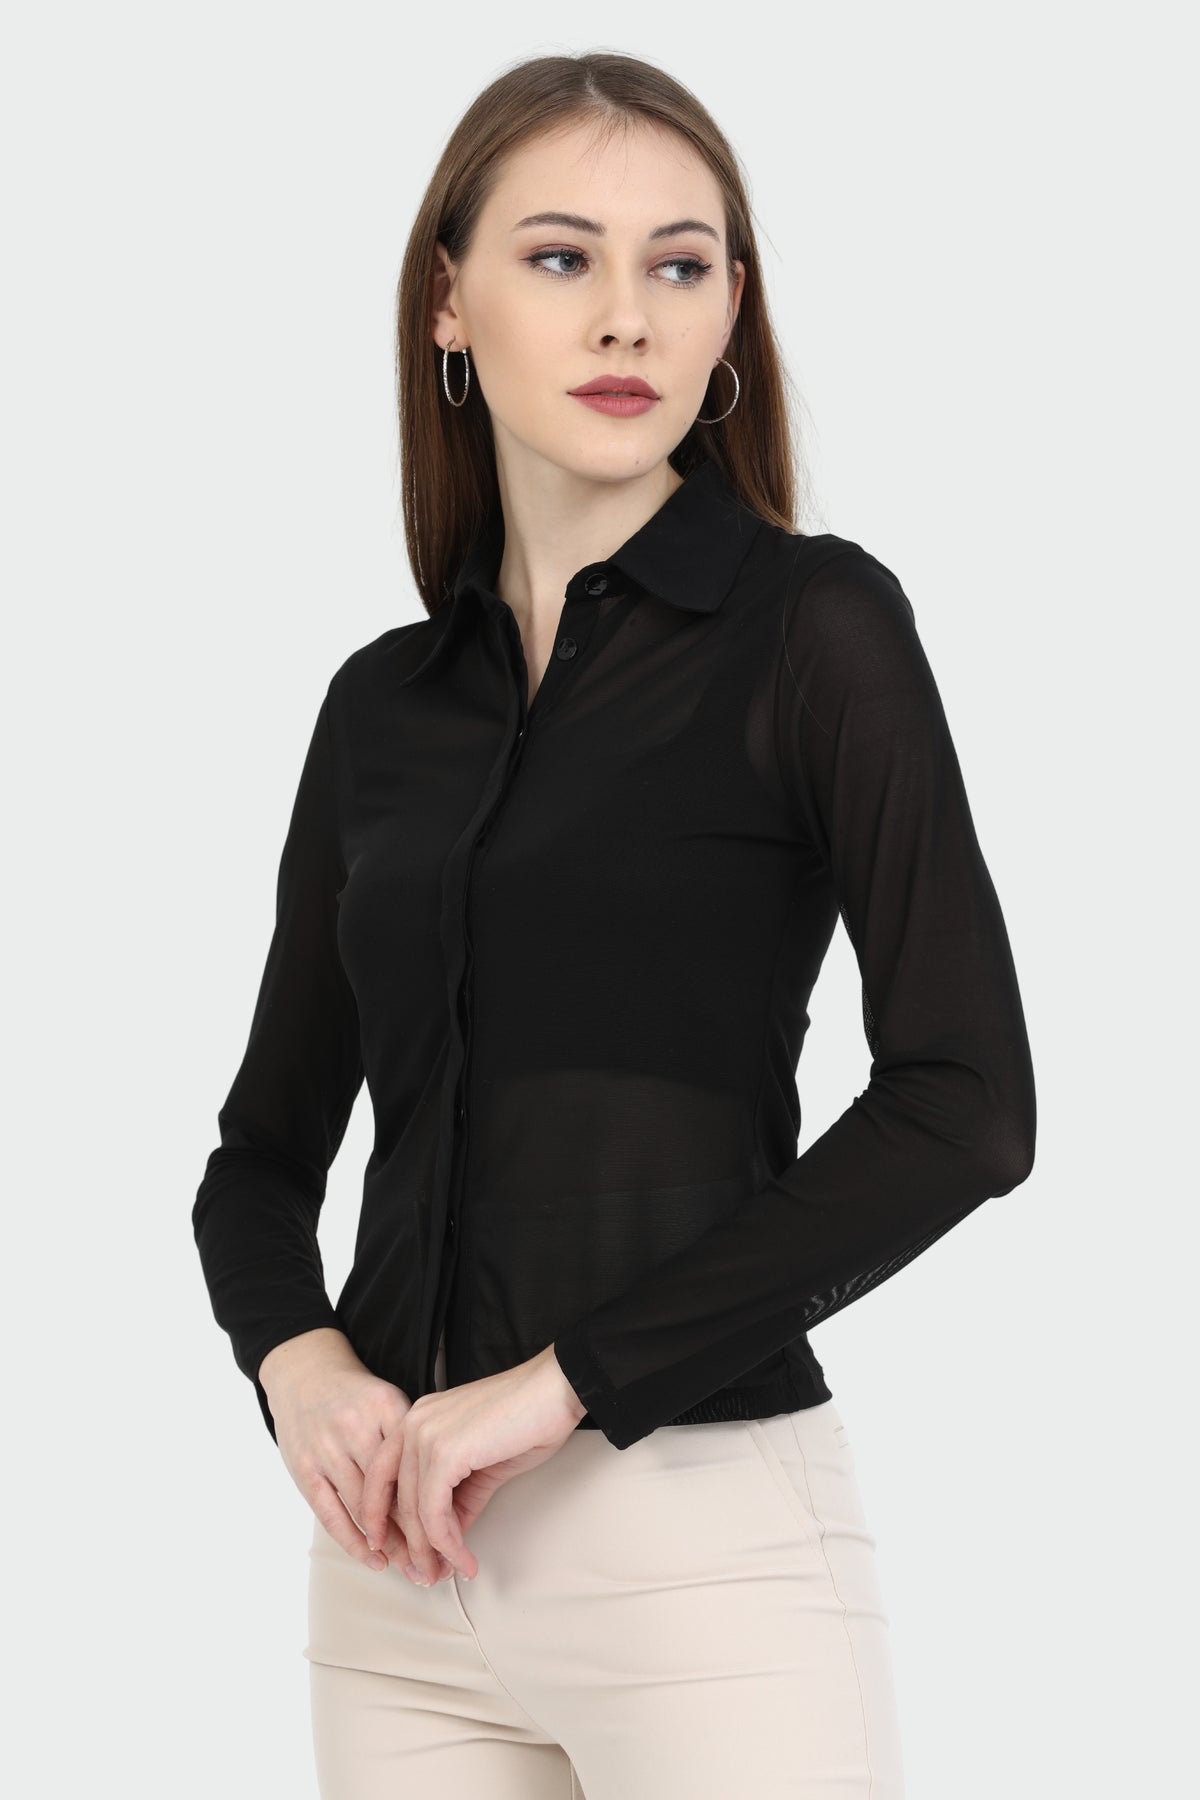 Long Sleeve Sheer Black Shirt